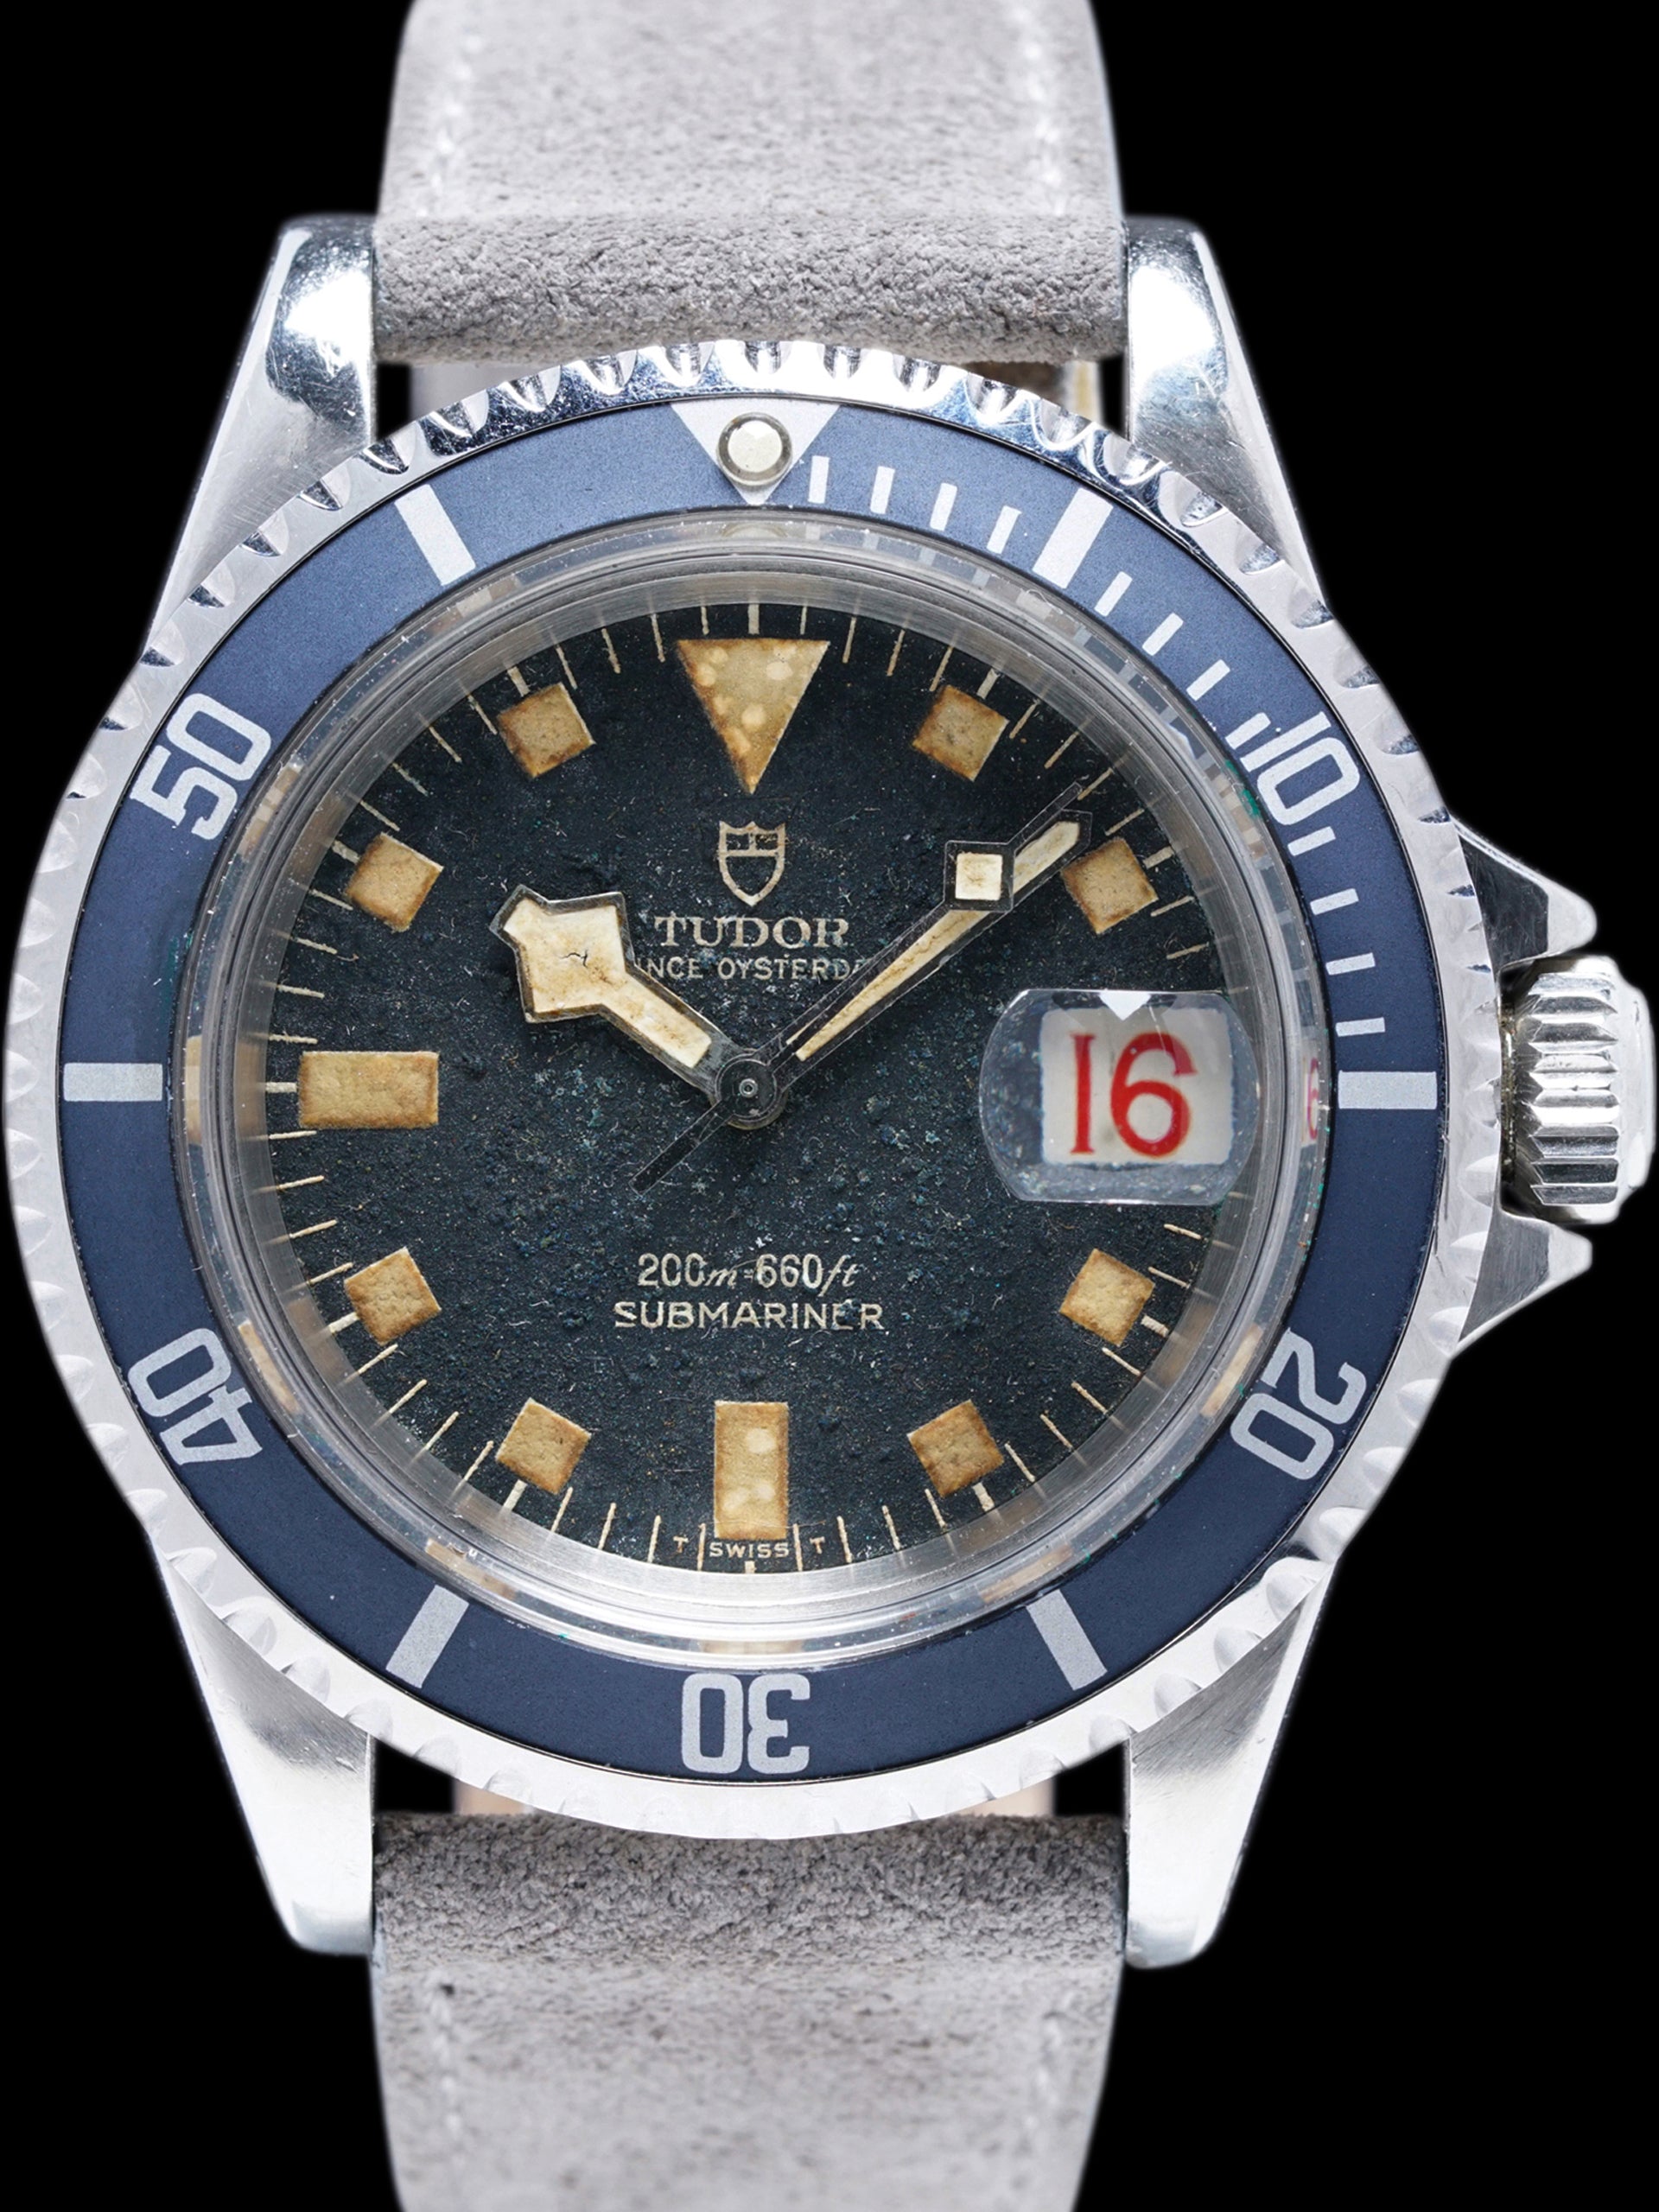 1969 Tudor Blue Snowflake Submariner (Ref. 7021/0) "Roulette Date"